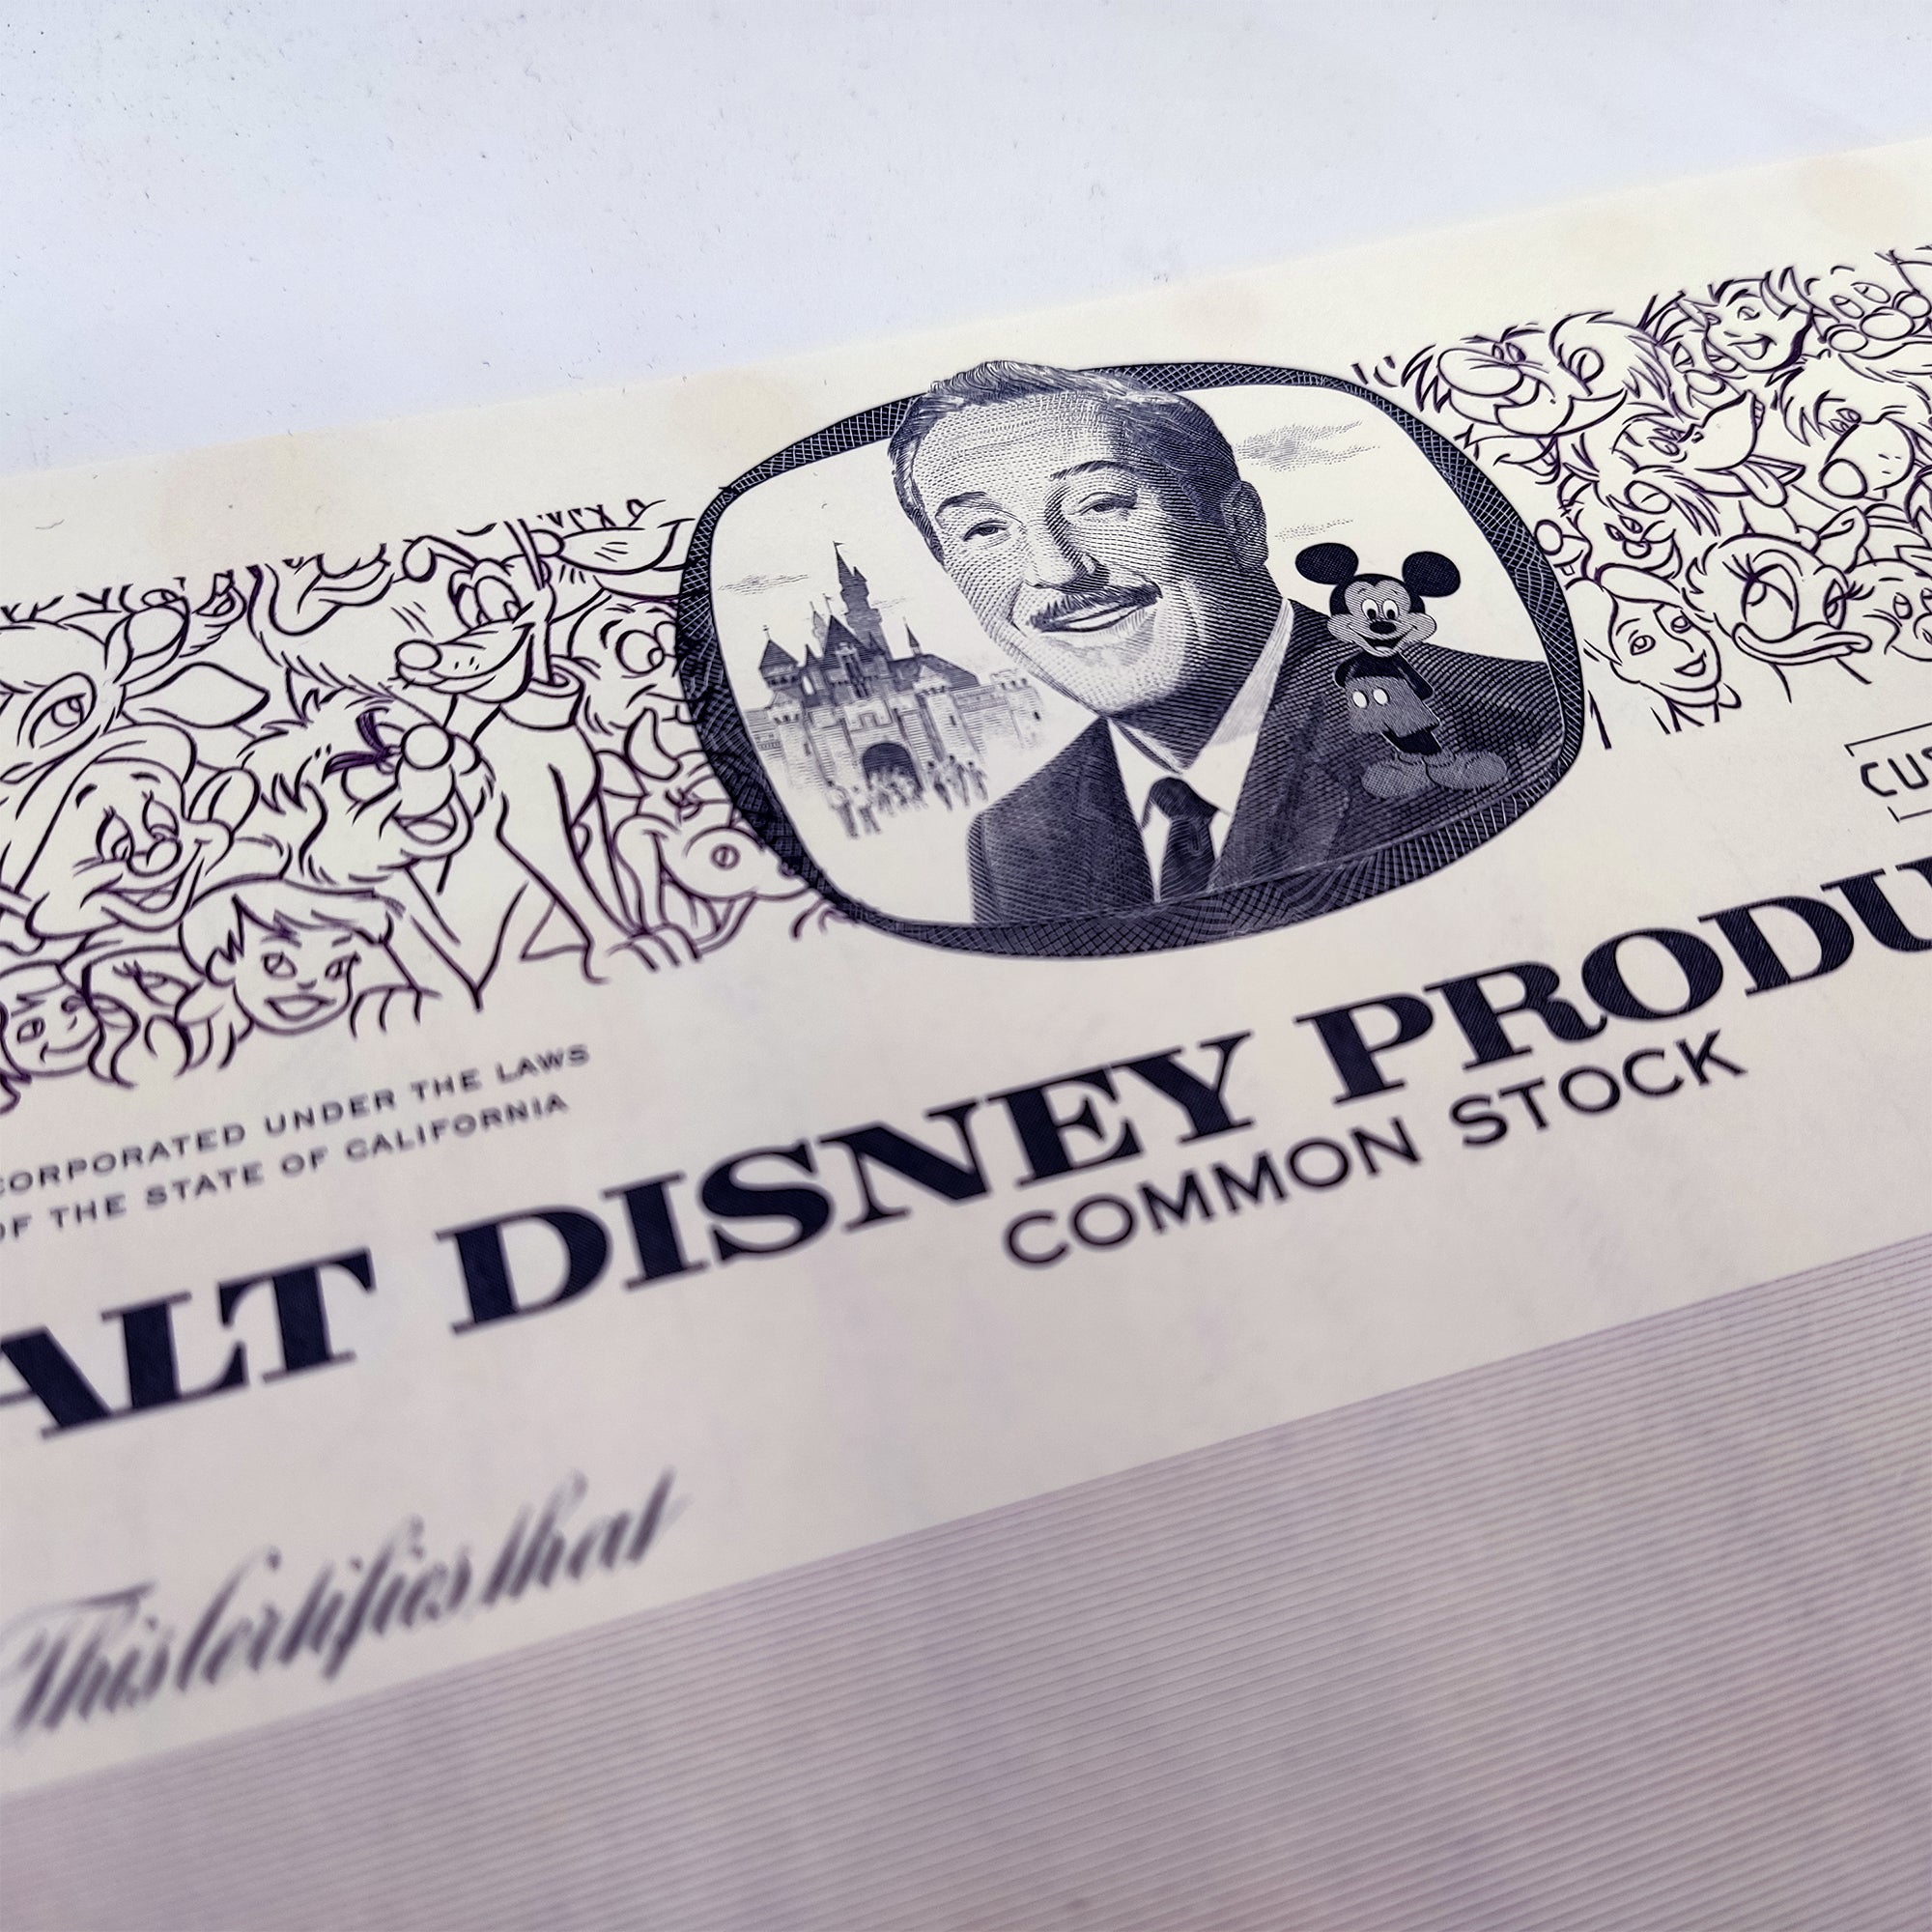 Walt Disney Productions Common Stock Certificate (Walt Disney